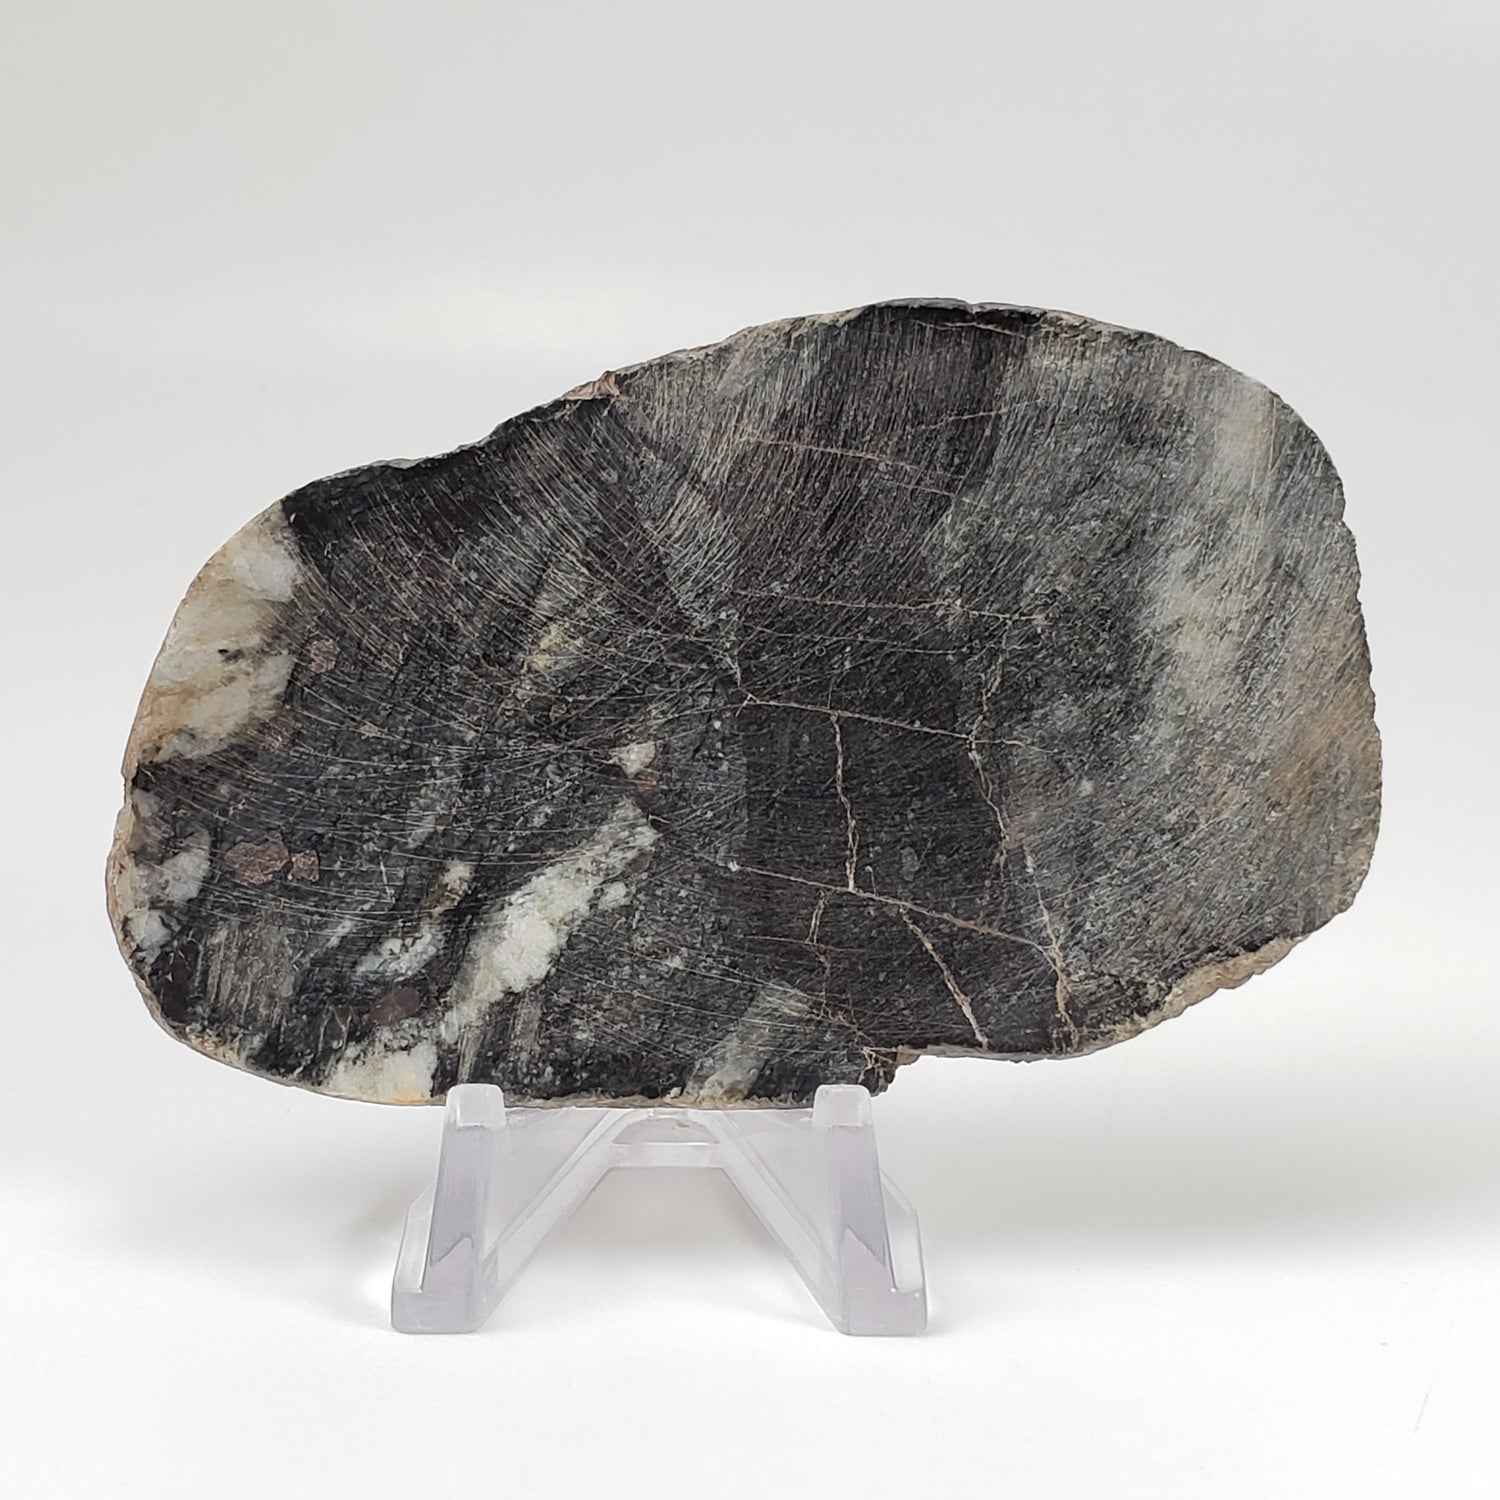 Dellenites Impact Melt Rock |  90.4 grams | HT Tagamite | Dellen Crater, Sweden